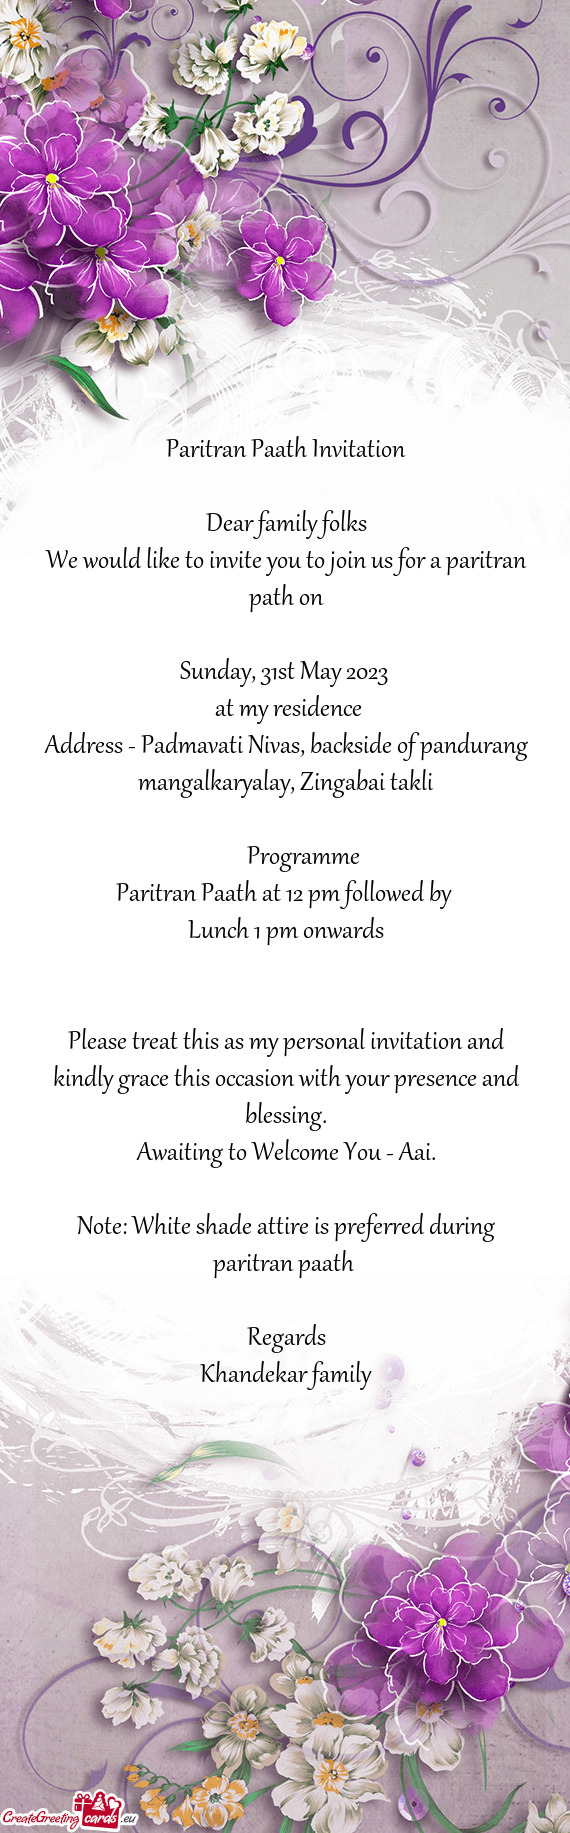 Address - Padmavati Nivas, backside of pandurang mangalkaryalay, Zingabai takli